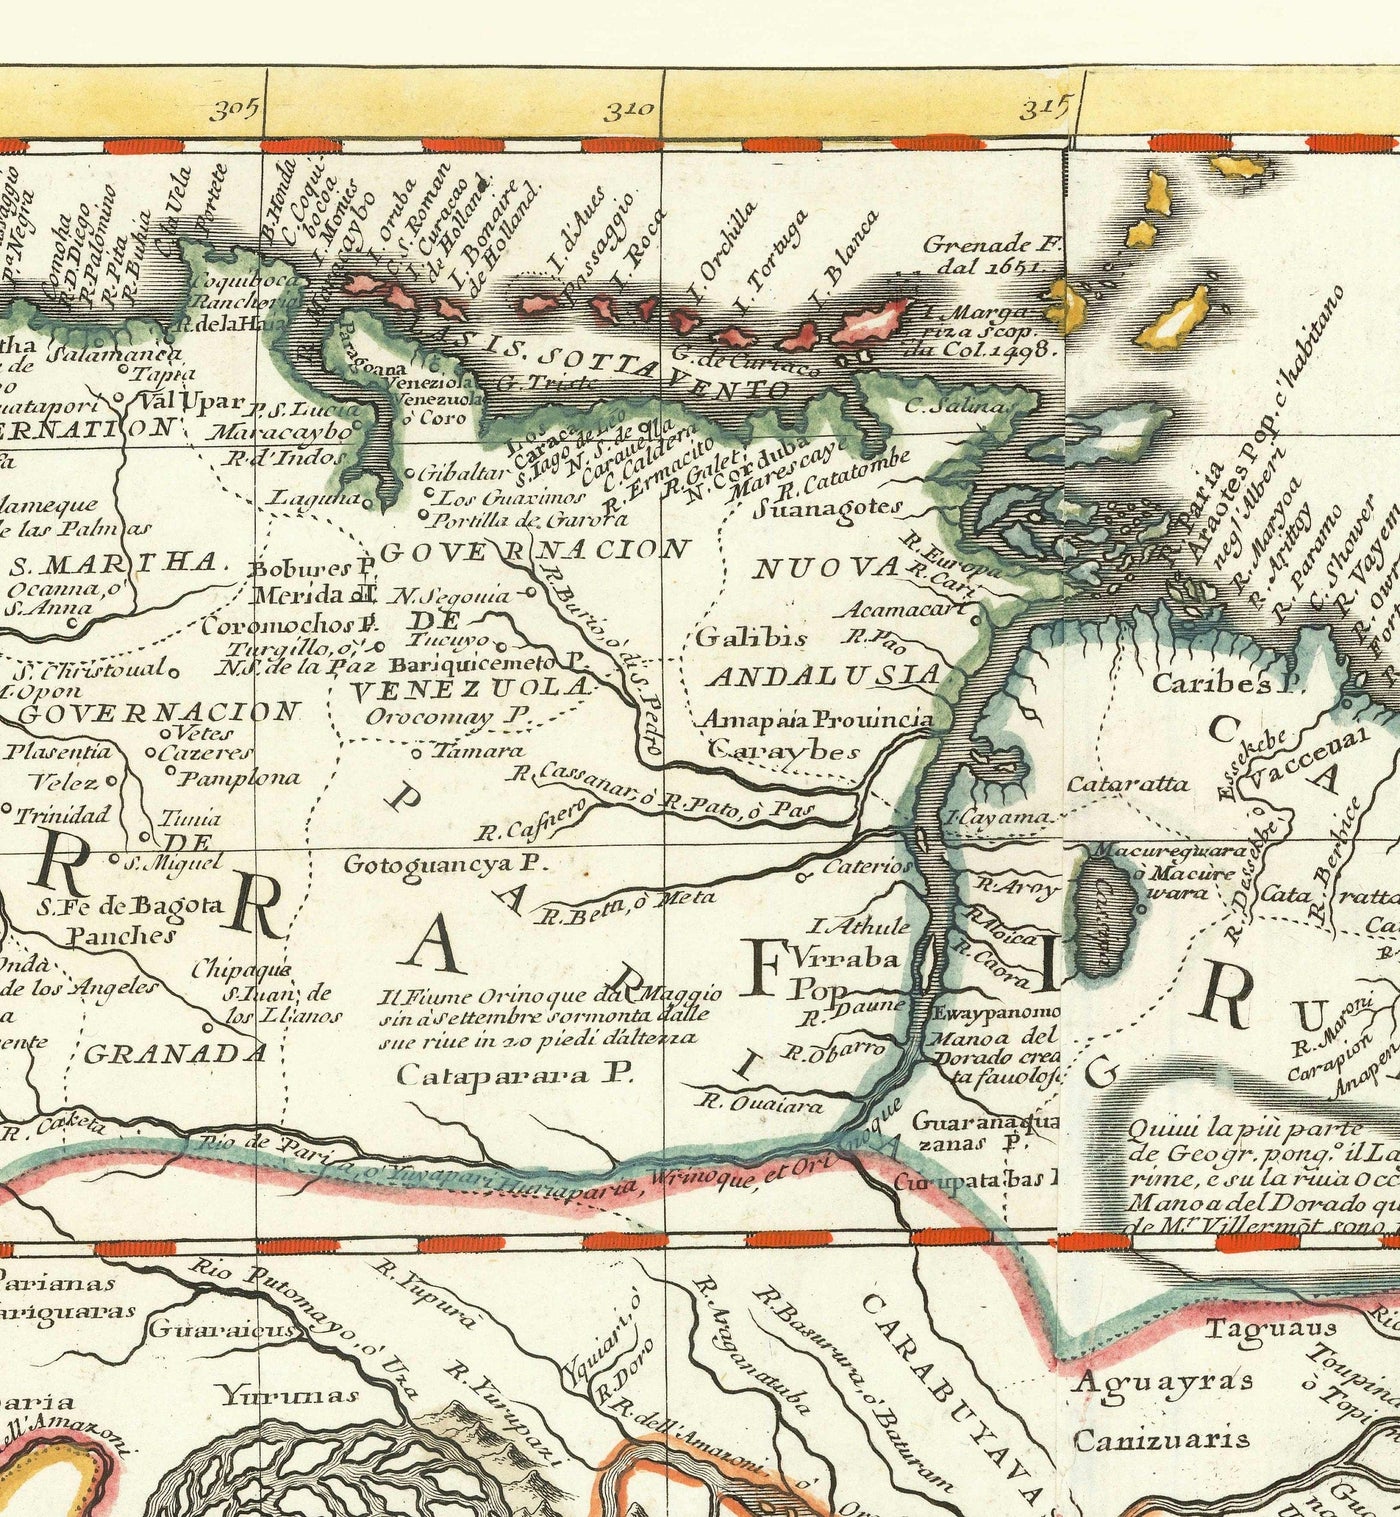 Old Map of South America by Coronelli 1690 - Brazil, Spanish Colonies, Peru, Paraguay, Venezuela, Magellanica, Amazon